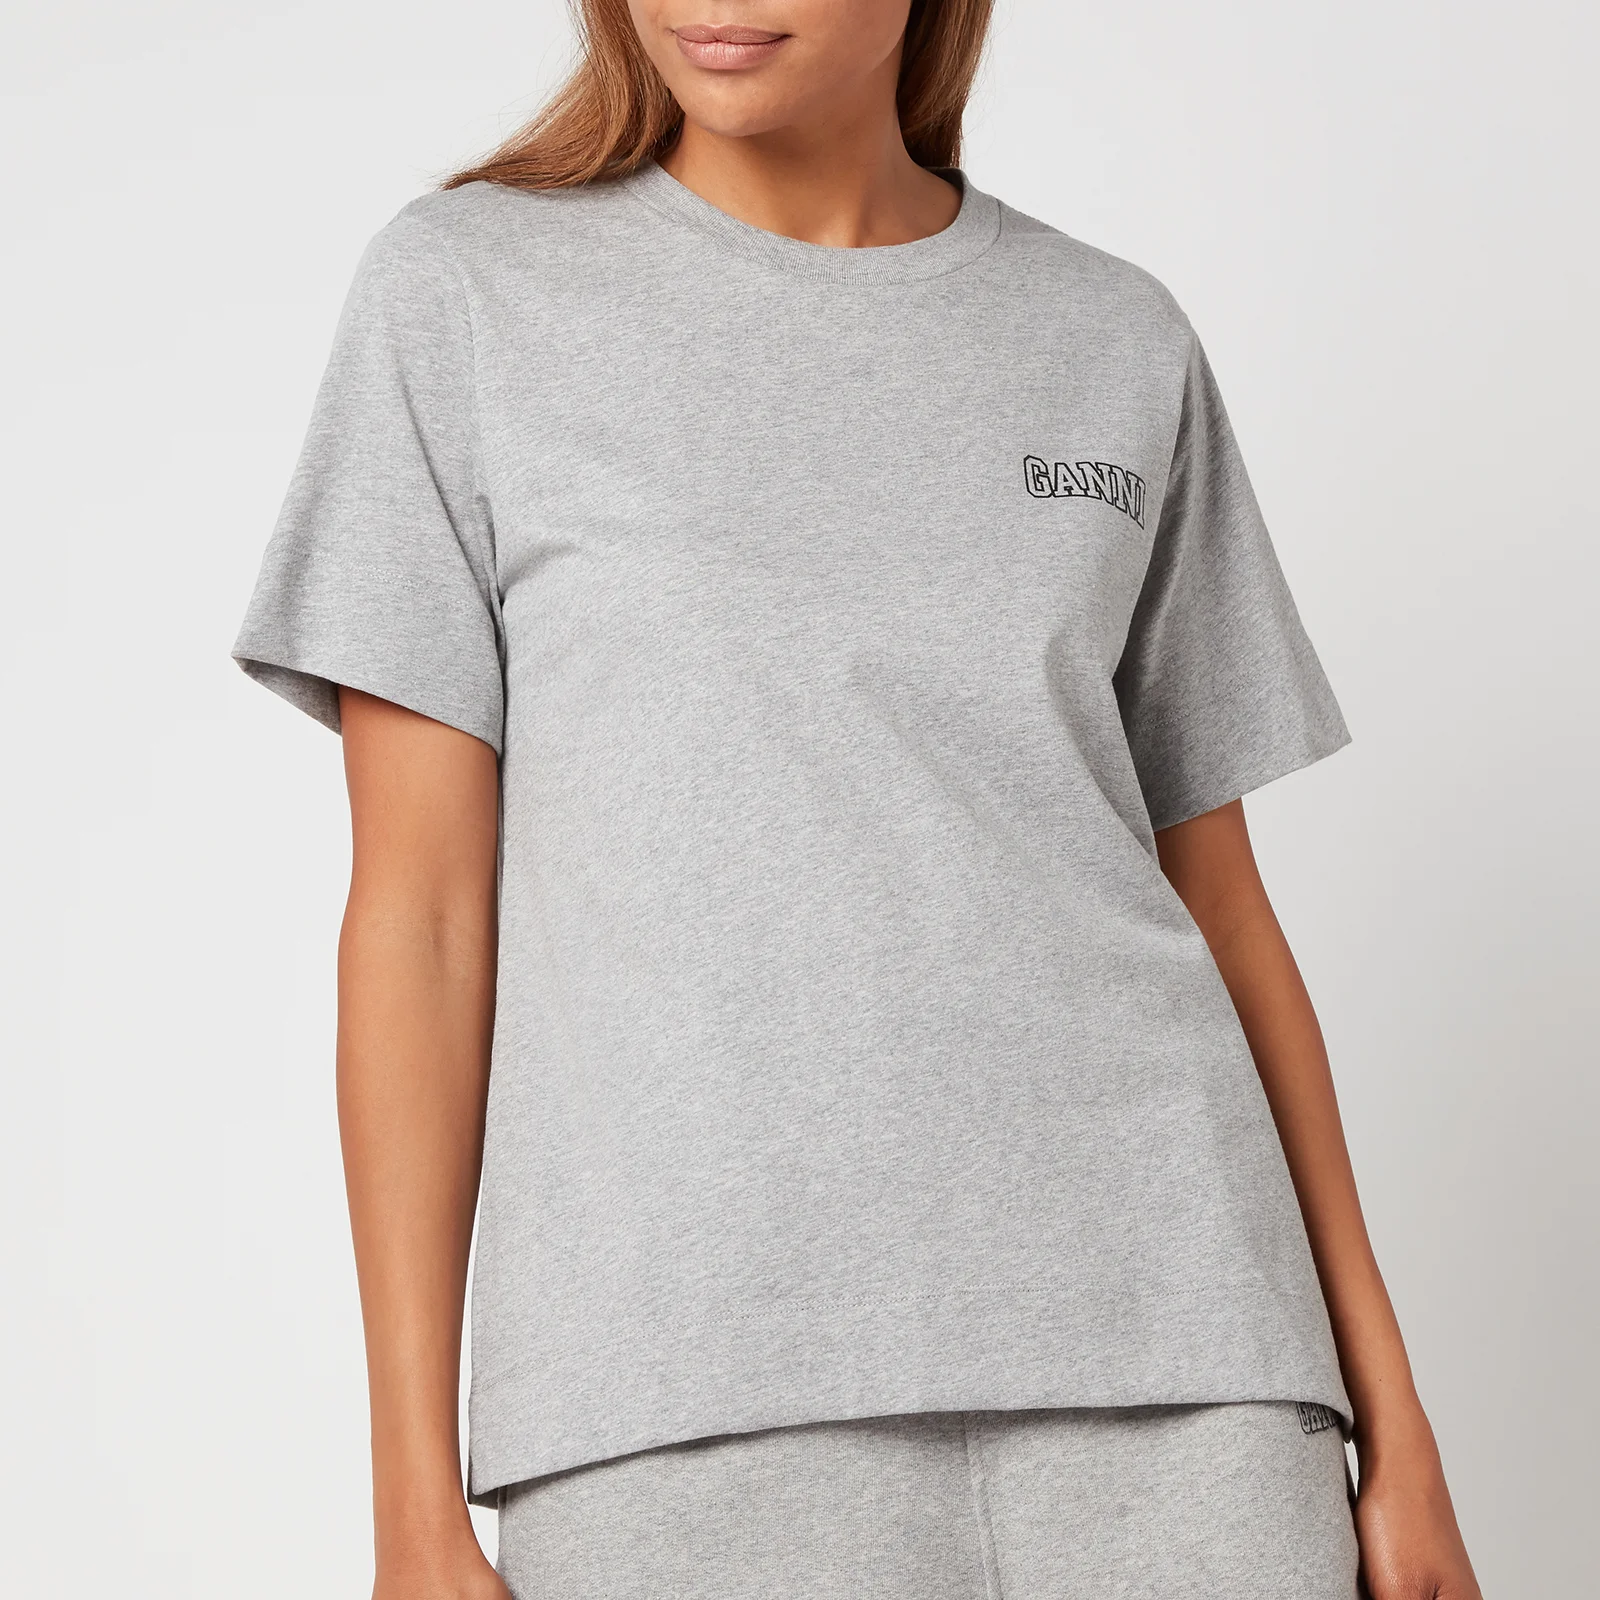 Ganni Women's Thin Software Jersey T-Shirt - Paloma Melange Image 1